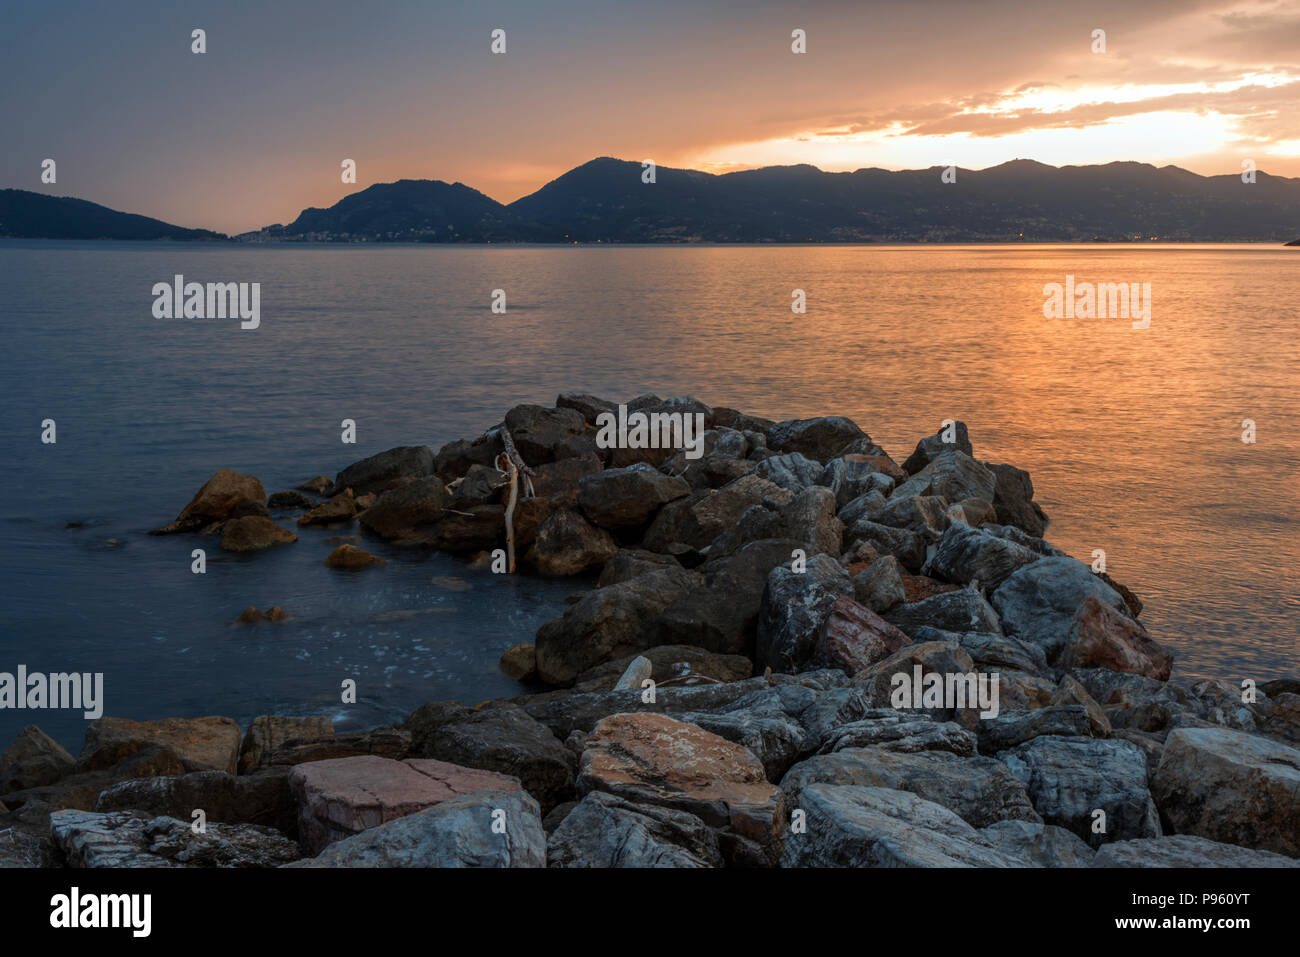 Time exposure of rocks and the ocean, from Tellaro looking towards La Spezia, Italy. Stock Photo